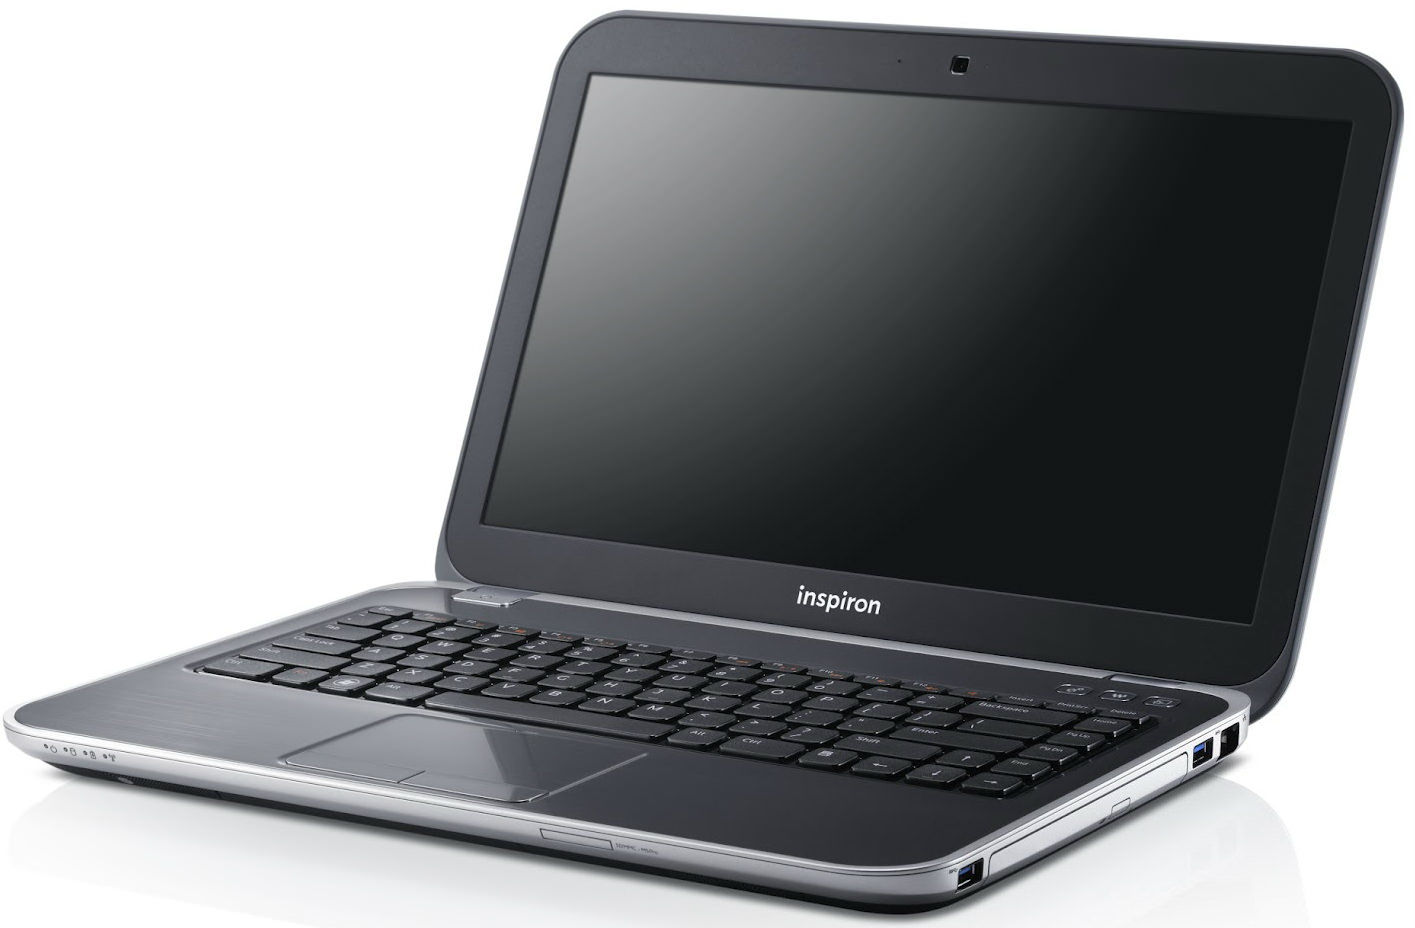 Dell Inspiron 14R 5420 Laptop (Core i5 3rd Gen/4 GB/500 GB/Windows 7) Price